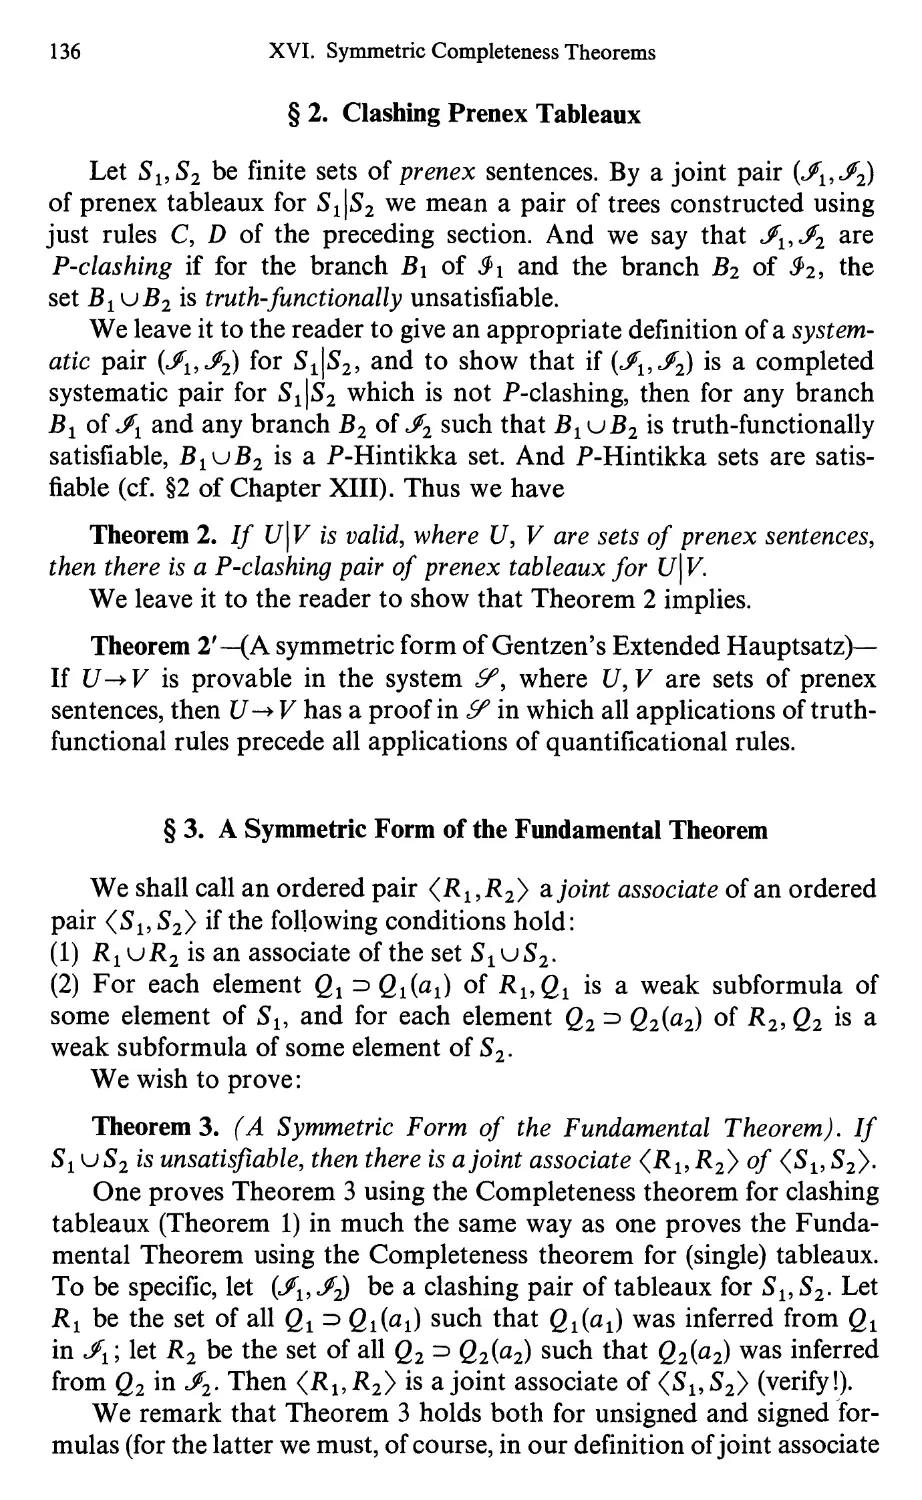 16.2 Clashing Prenex Tableaux
16.3 A Symmetric Form of the Fundamental Theorem